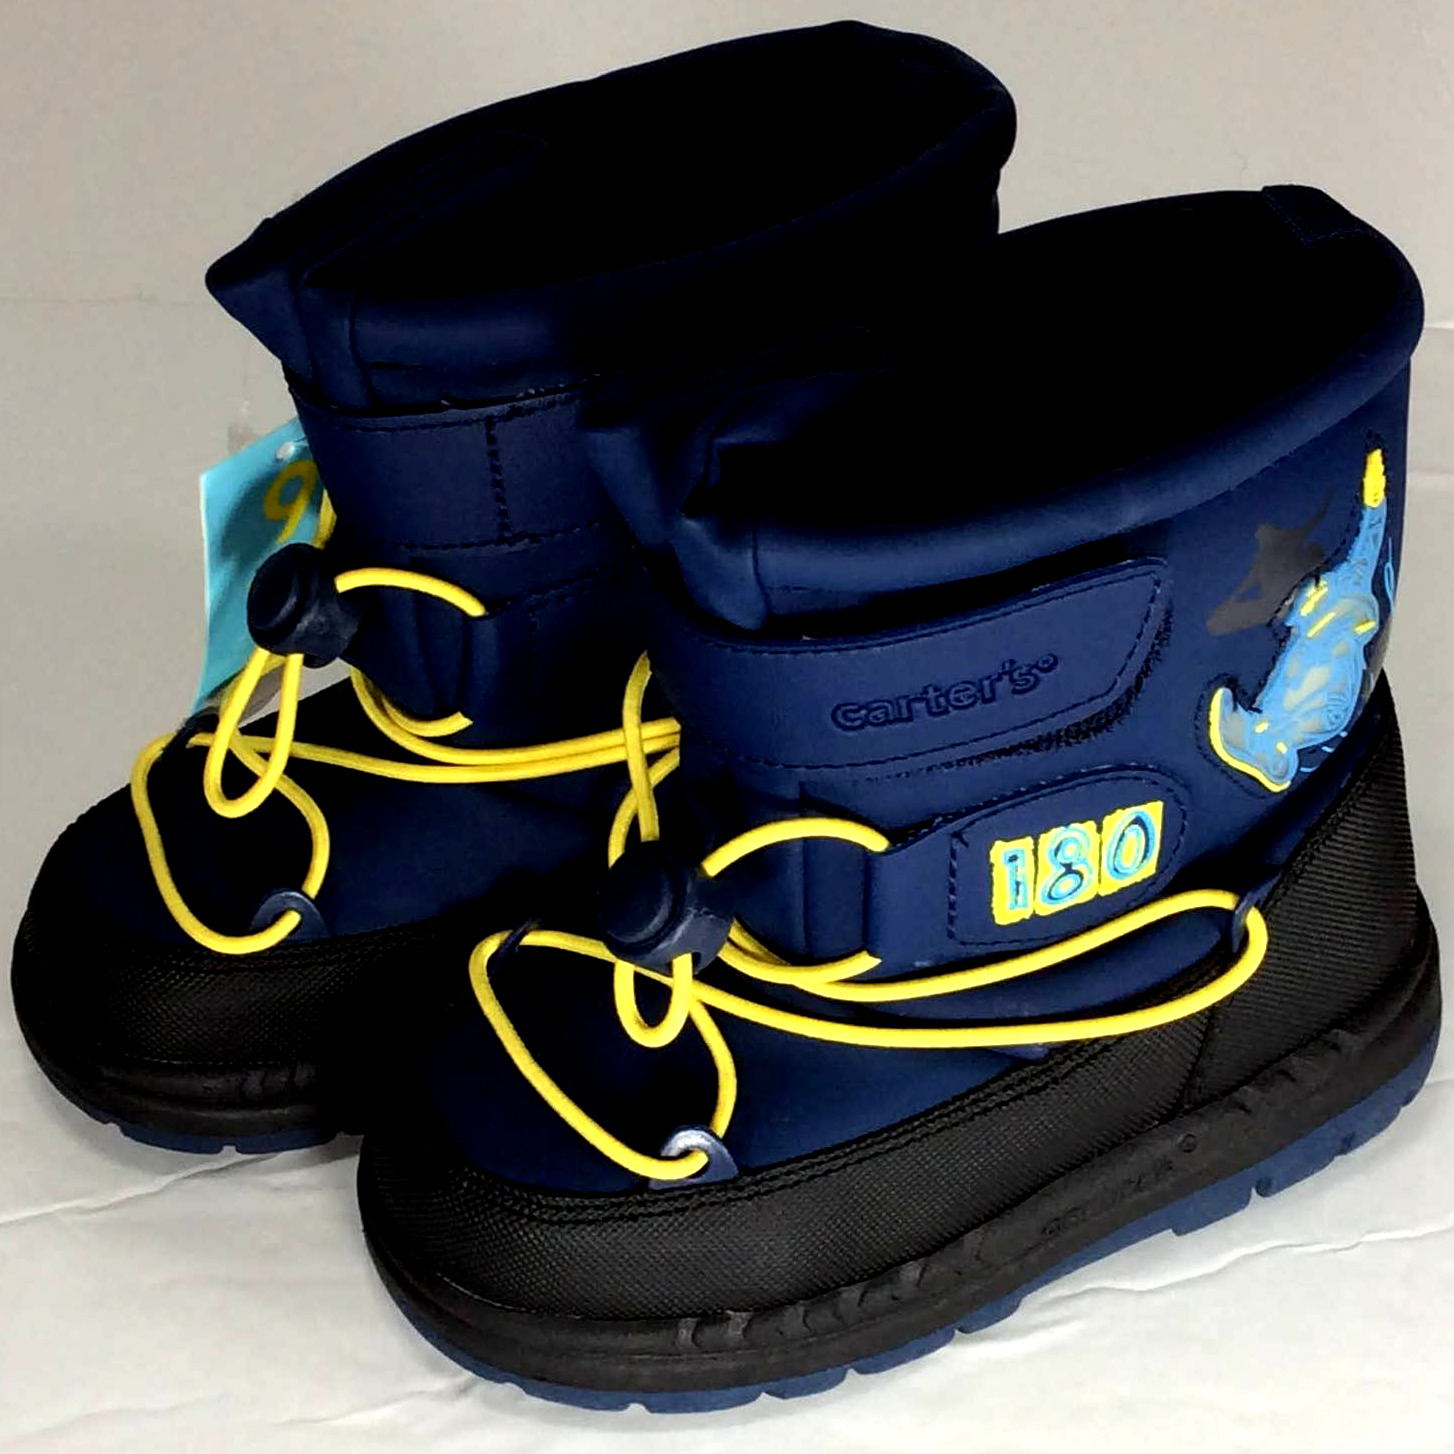 Carter's 180 Toddler Boys Girls Blue Rain Snow Winter Boots Size 9 M New Defects